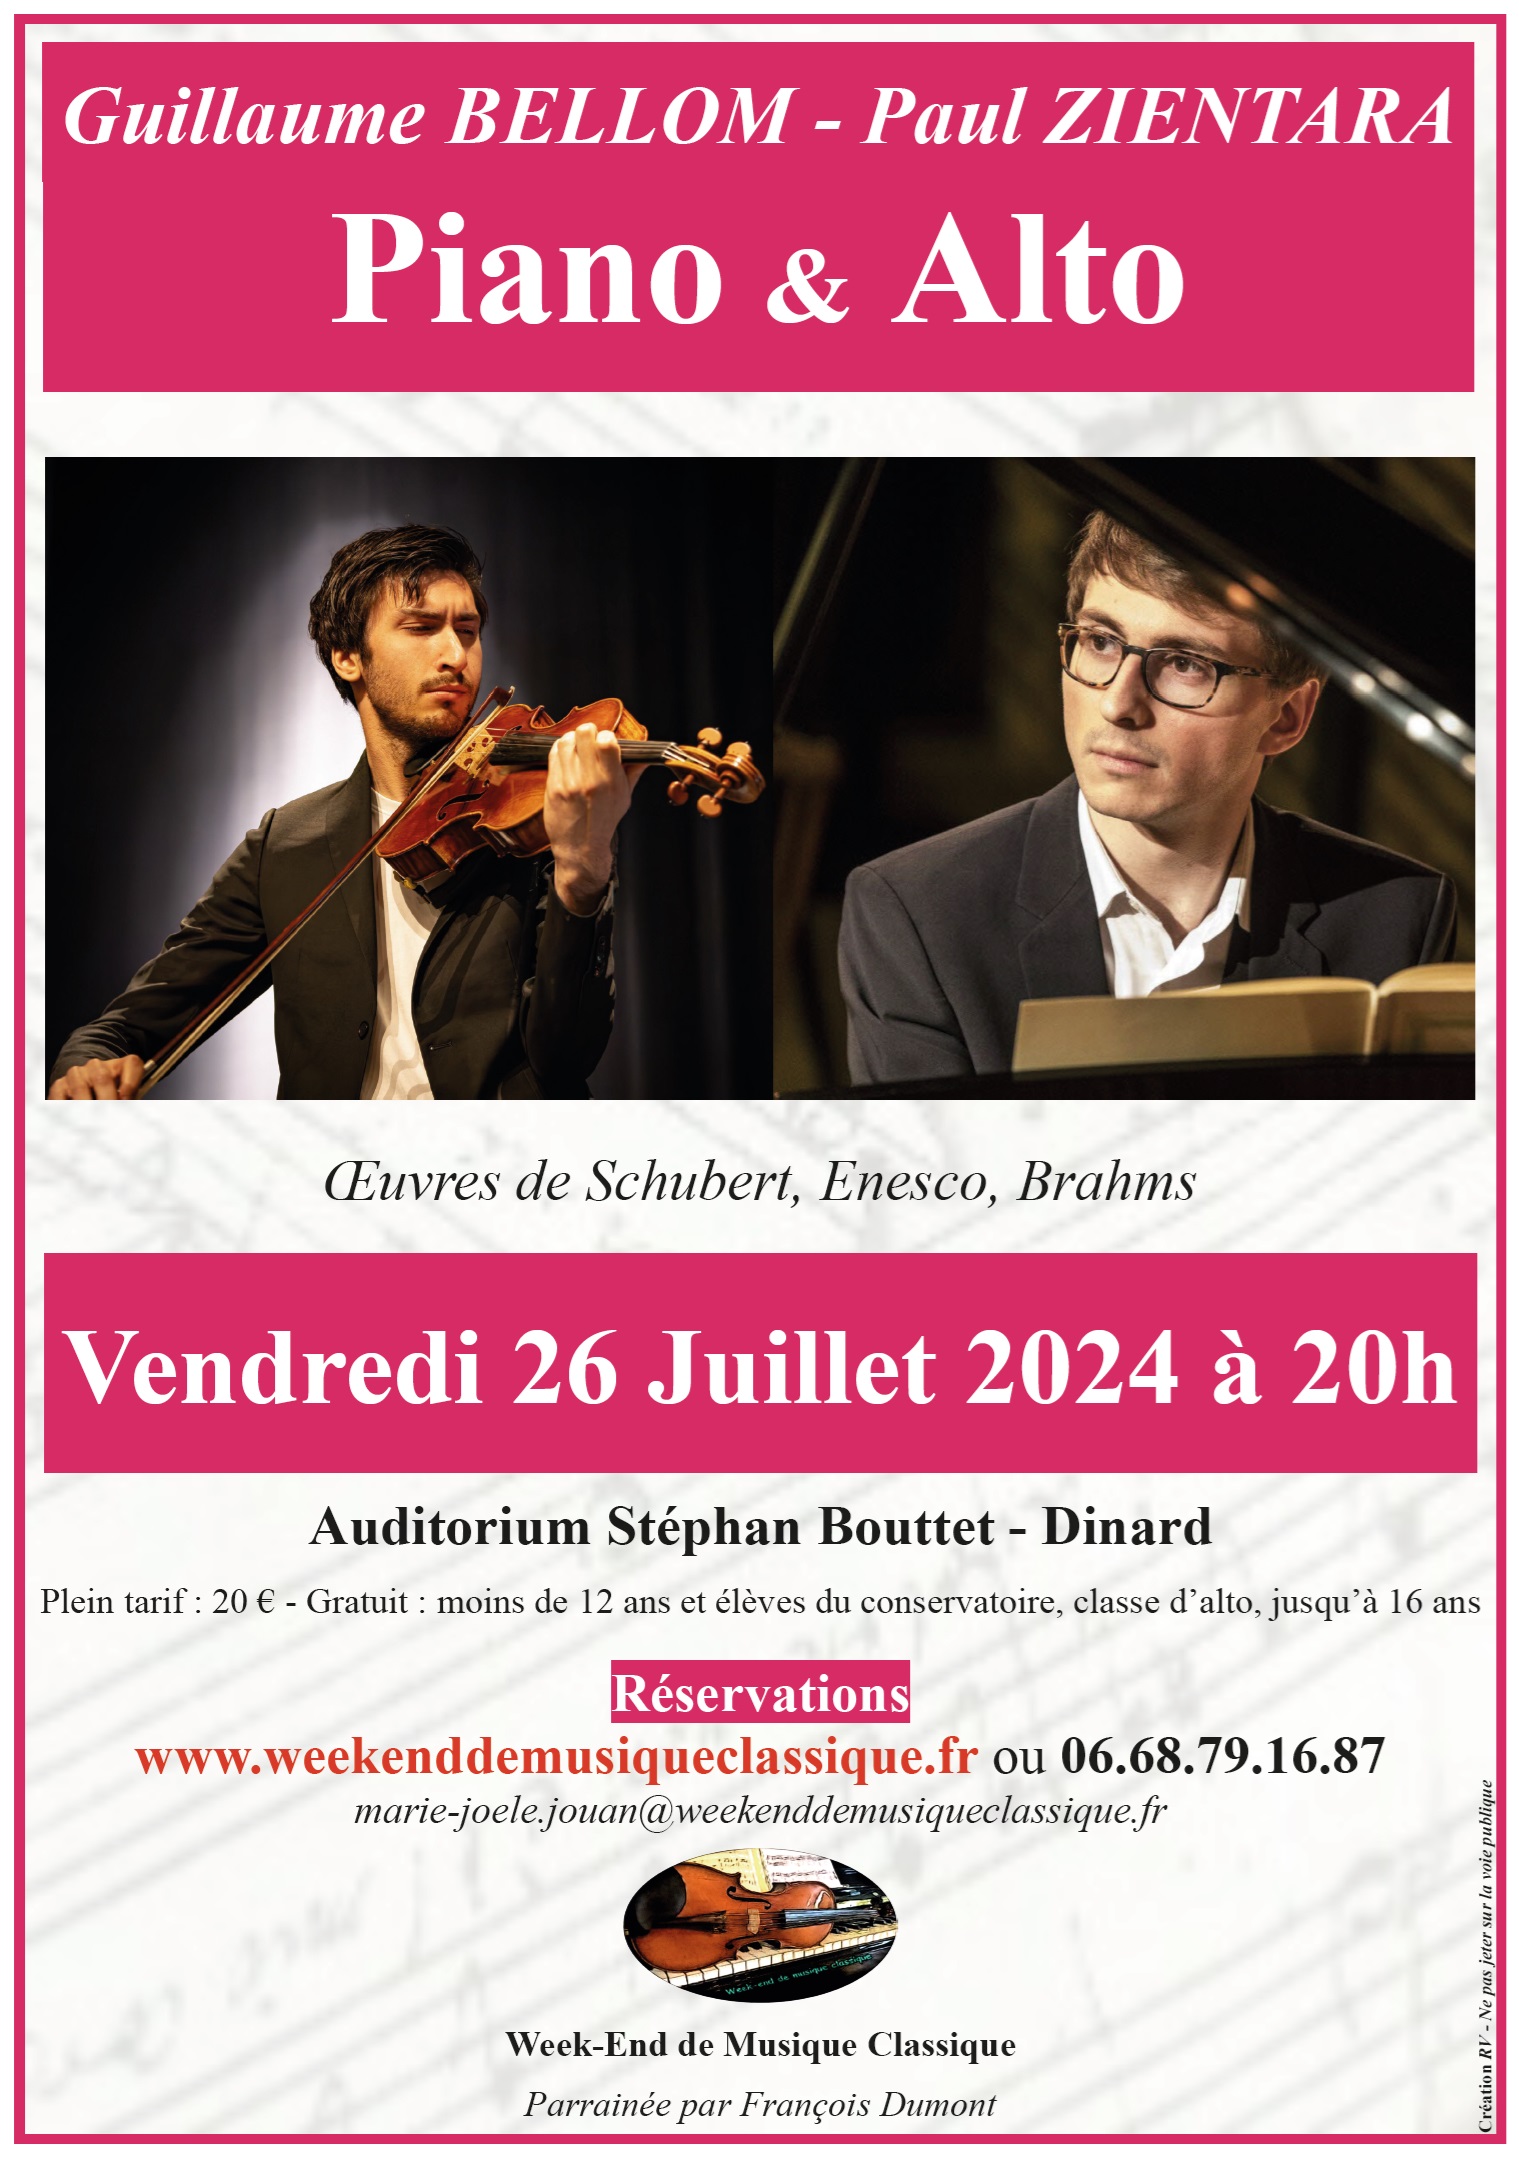  Concert - Guillaume Bellom & Paul Zientara